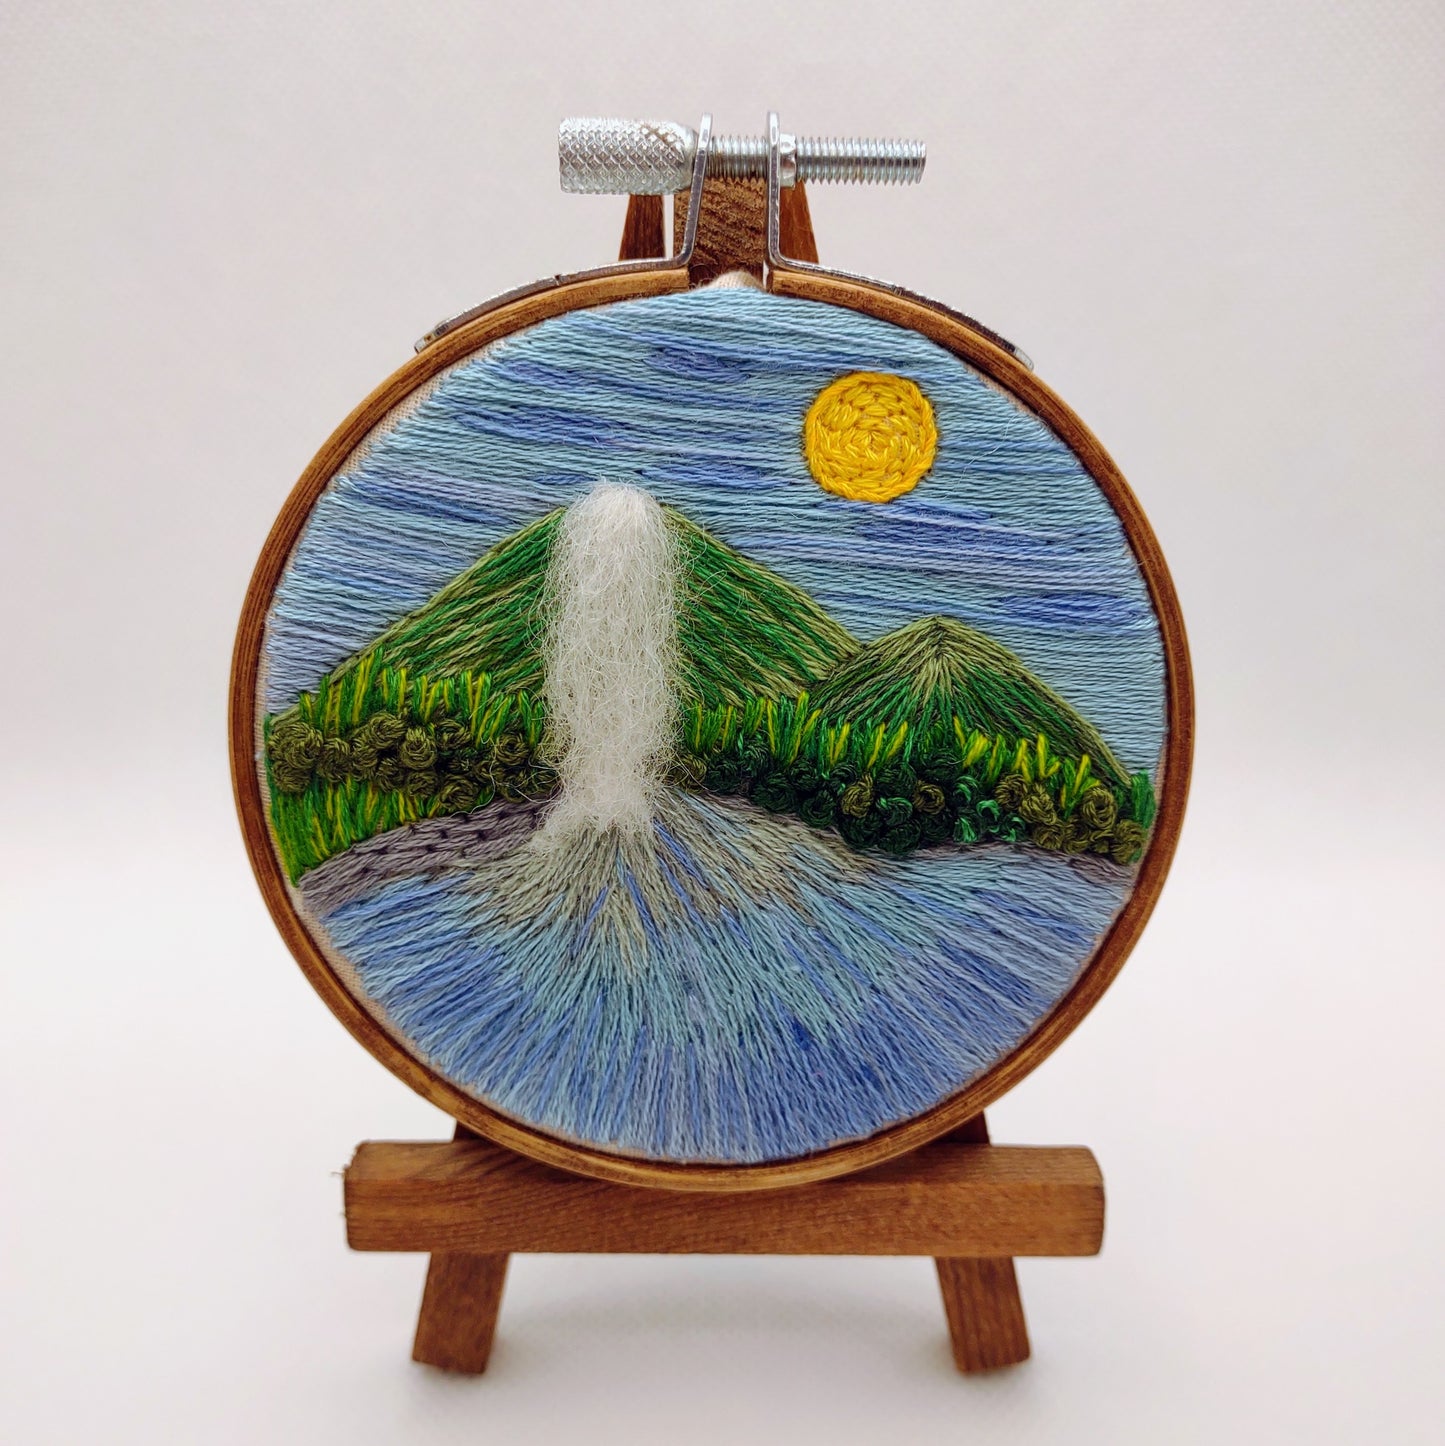 Majesty Waterfall - Hand Embroidery Miniature Scenery Landscape Art- Wanderlust Collection